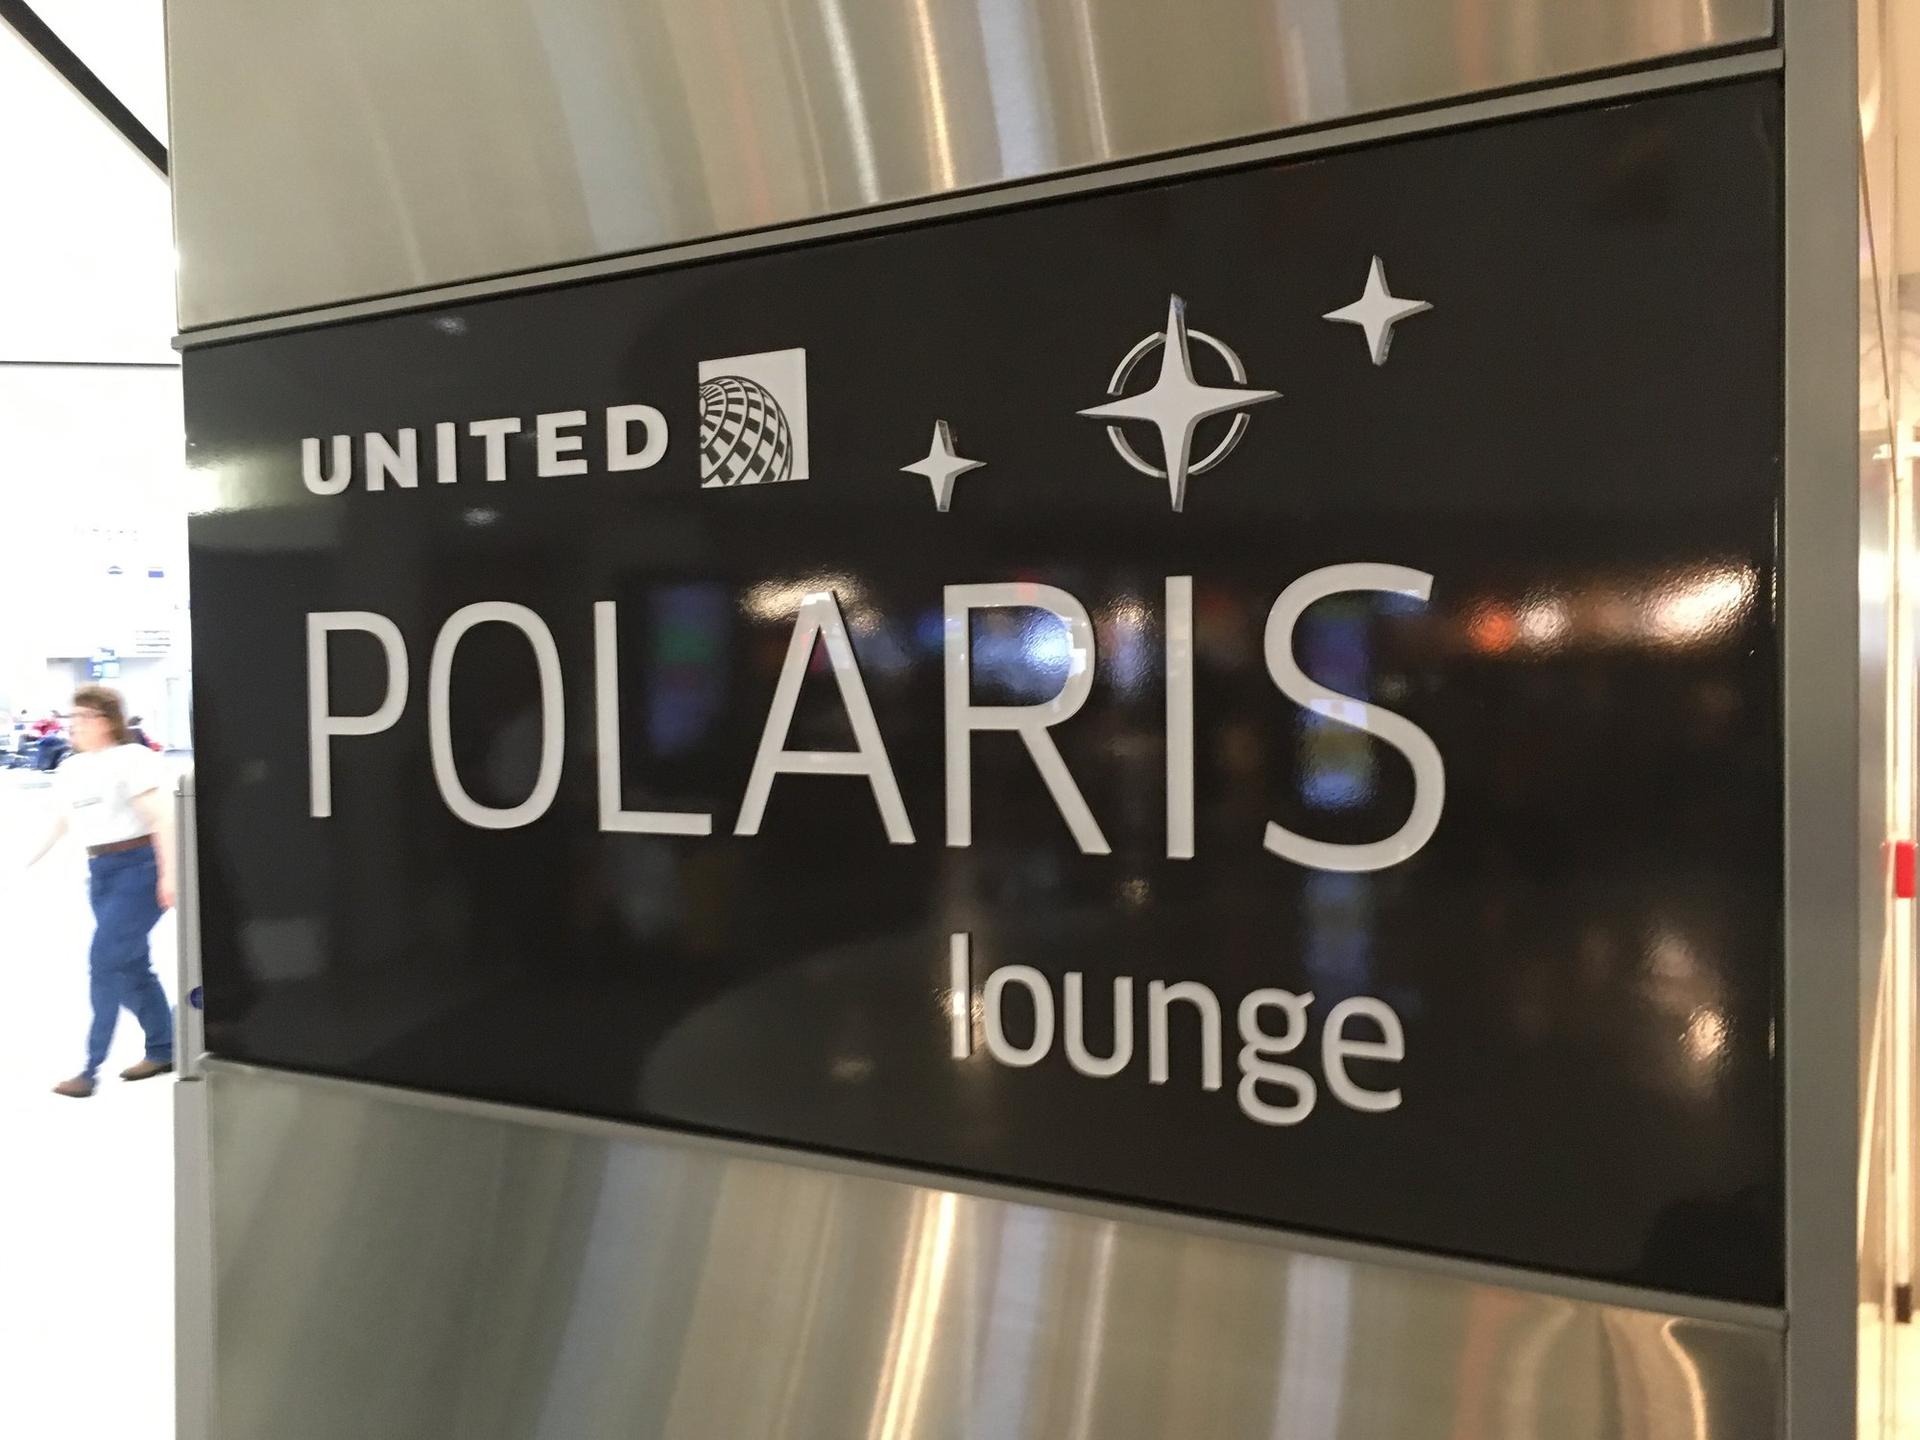 United Airlines Polaris Lounge image 61 of 84